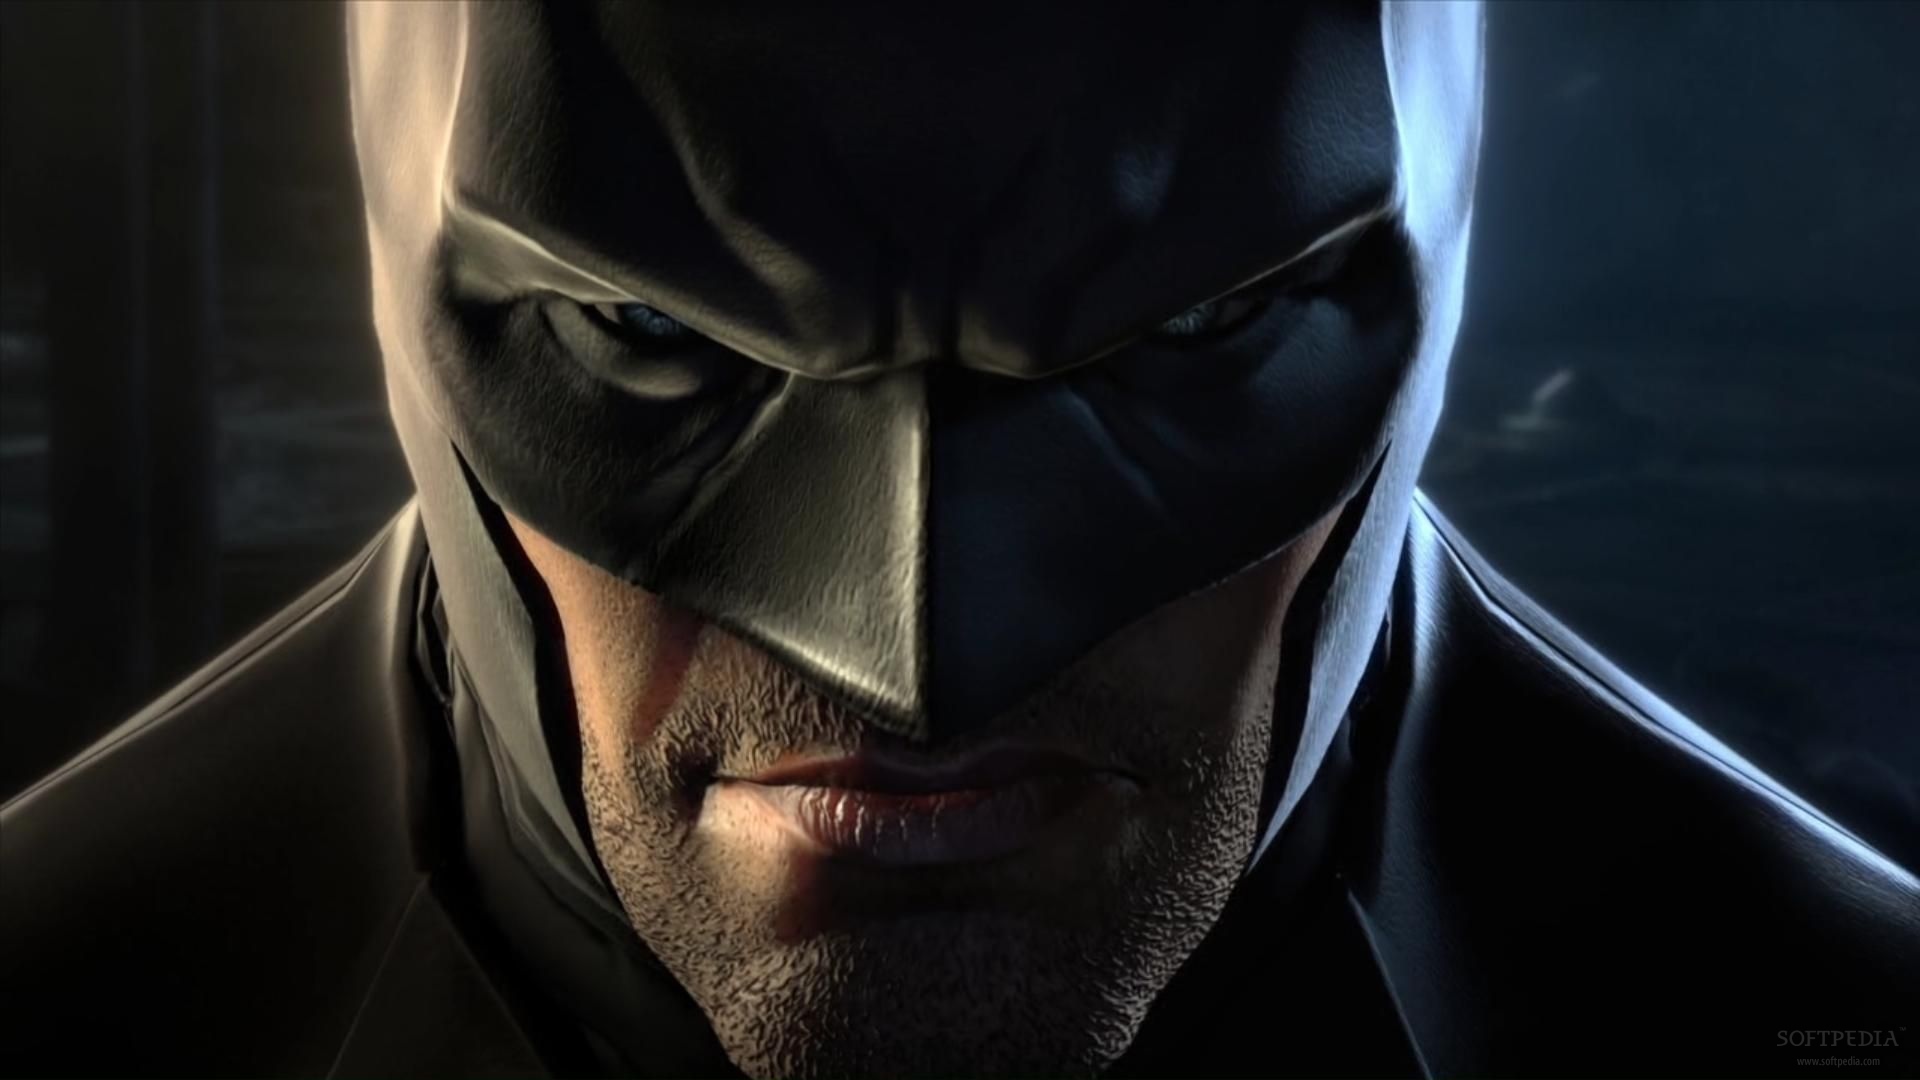 Bat-Fleck and Amazon Origins Lead New BATMAN VS SUPERMAN Rumors.